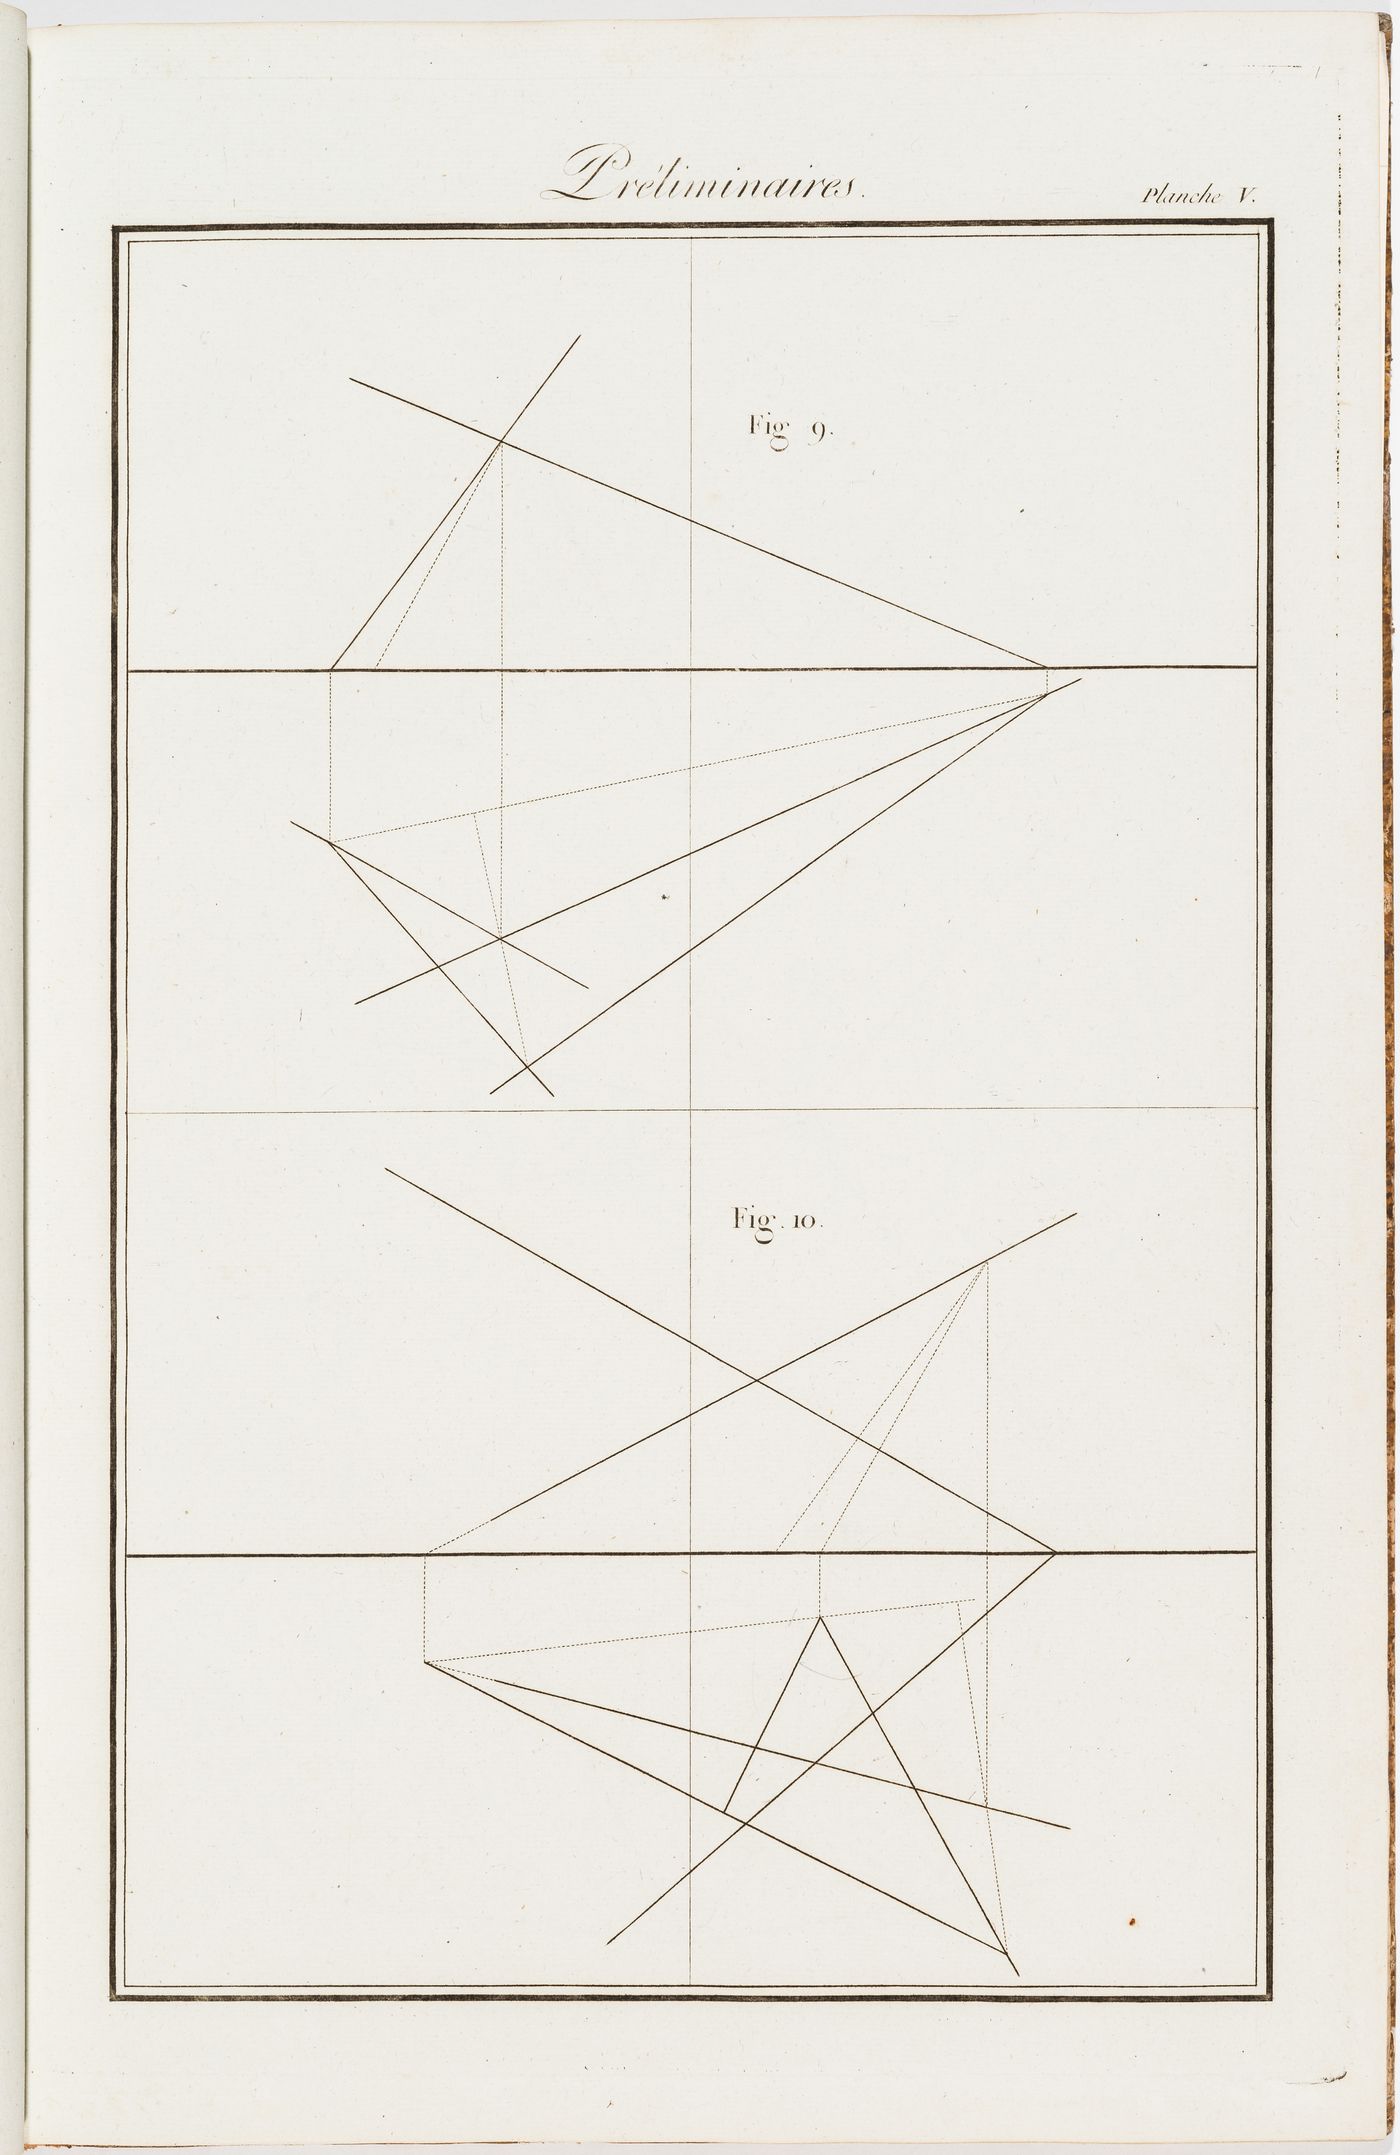 "Préliminaires": two geometry exercises